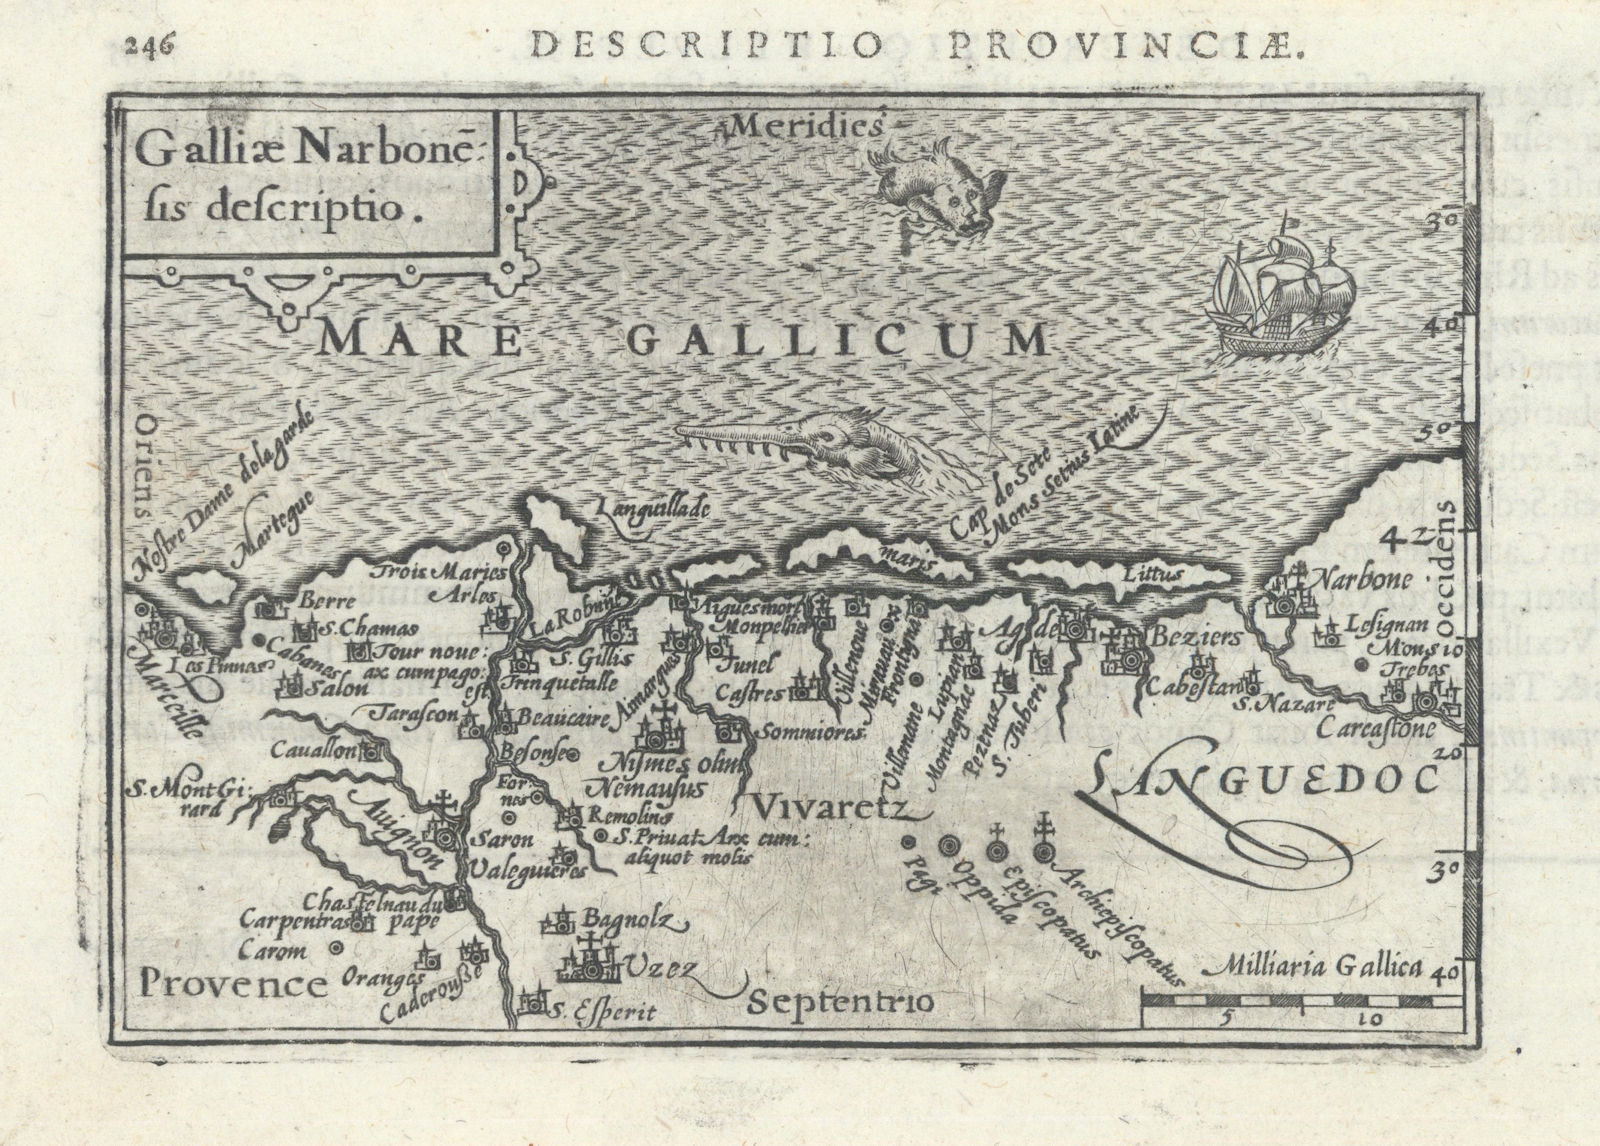 Provinciae/Galliae Narbonensis by Bertius/Langenes. Languedoc Provence 1603 map